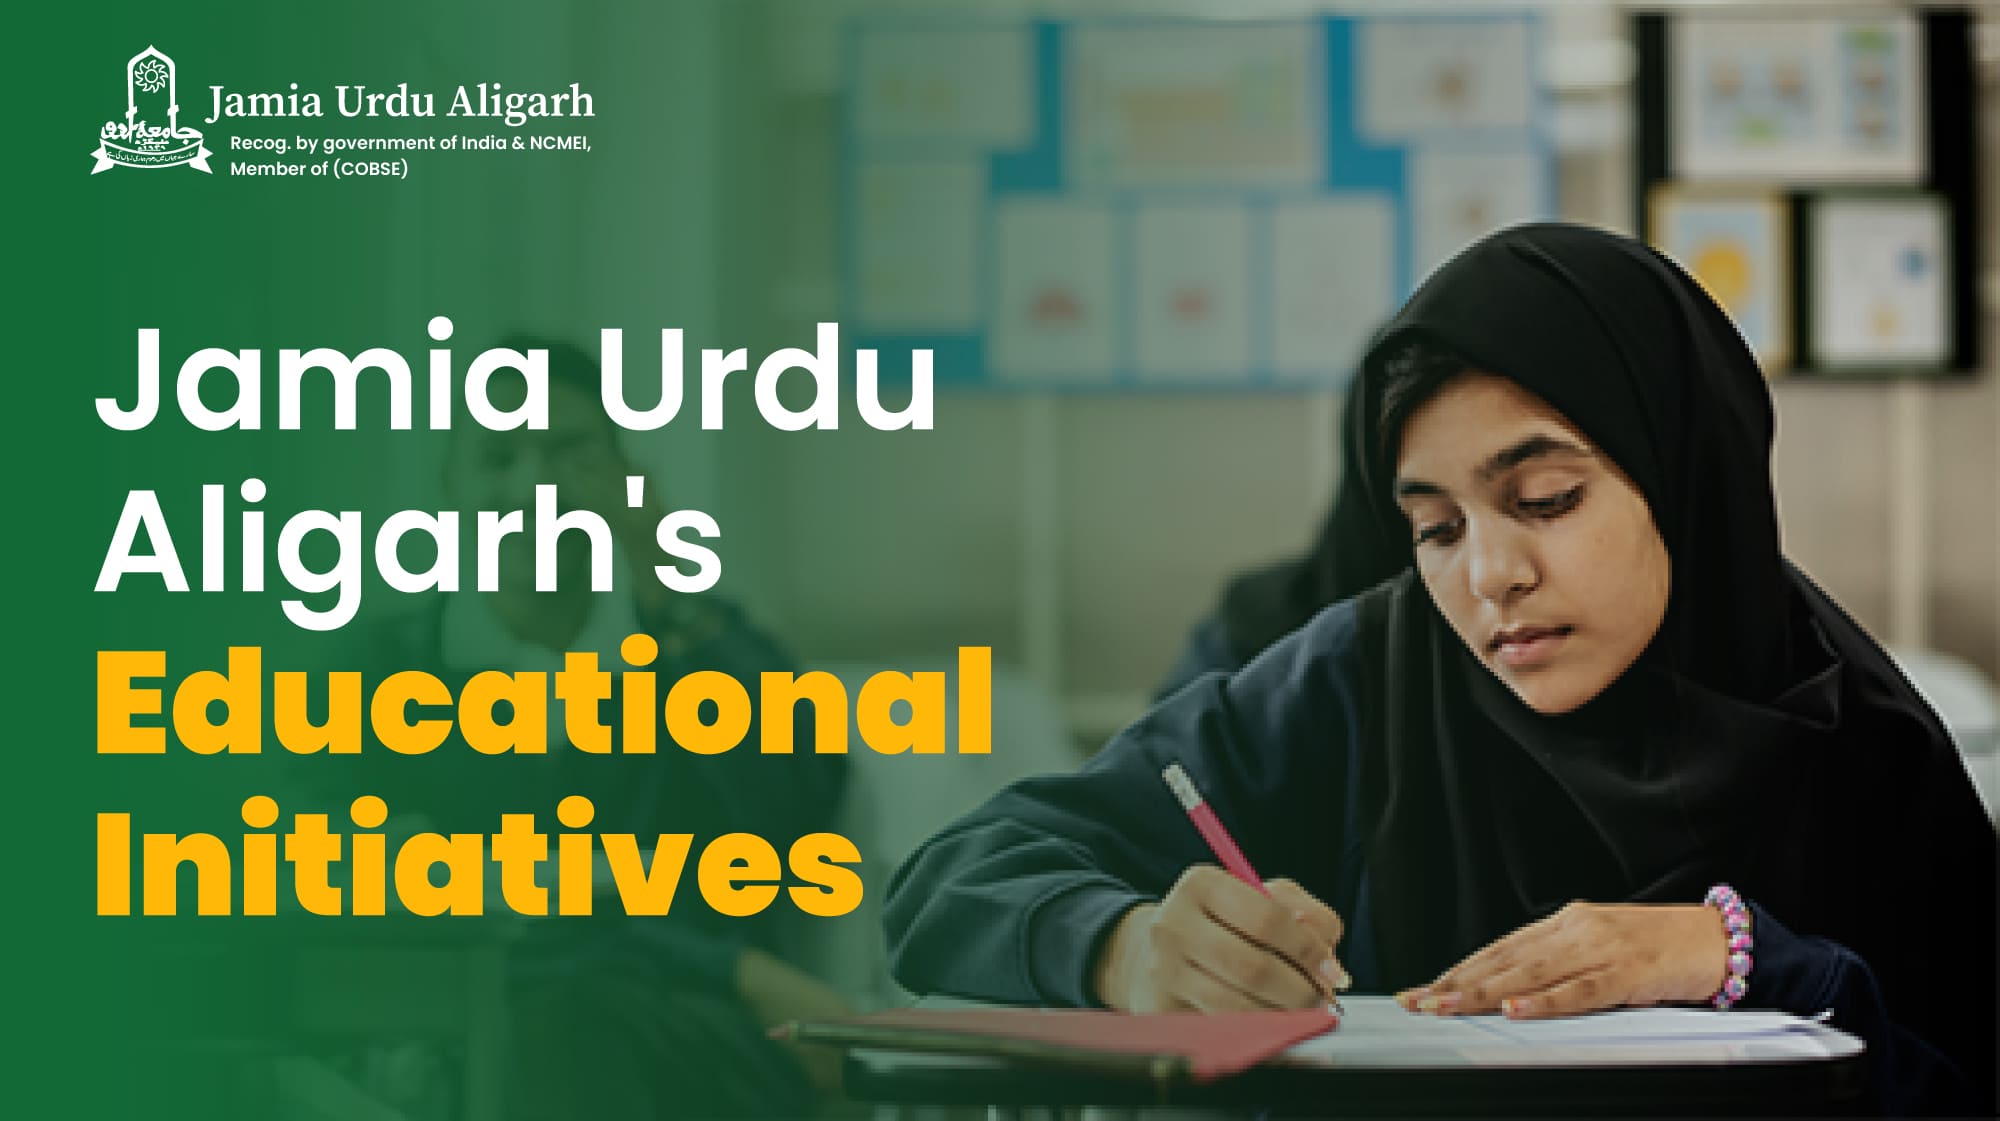 Jamia Urdu Aligarh's Educational Initiatives